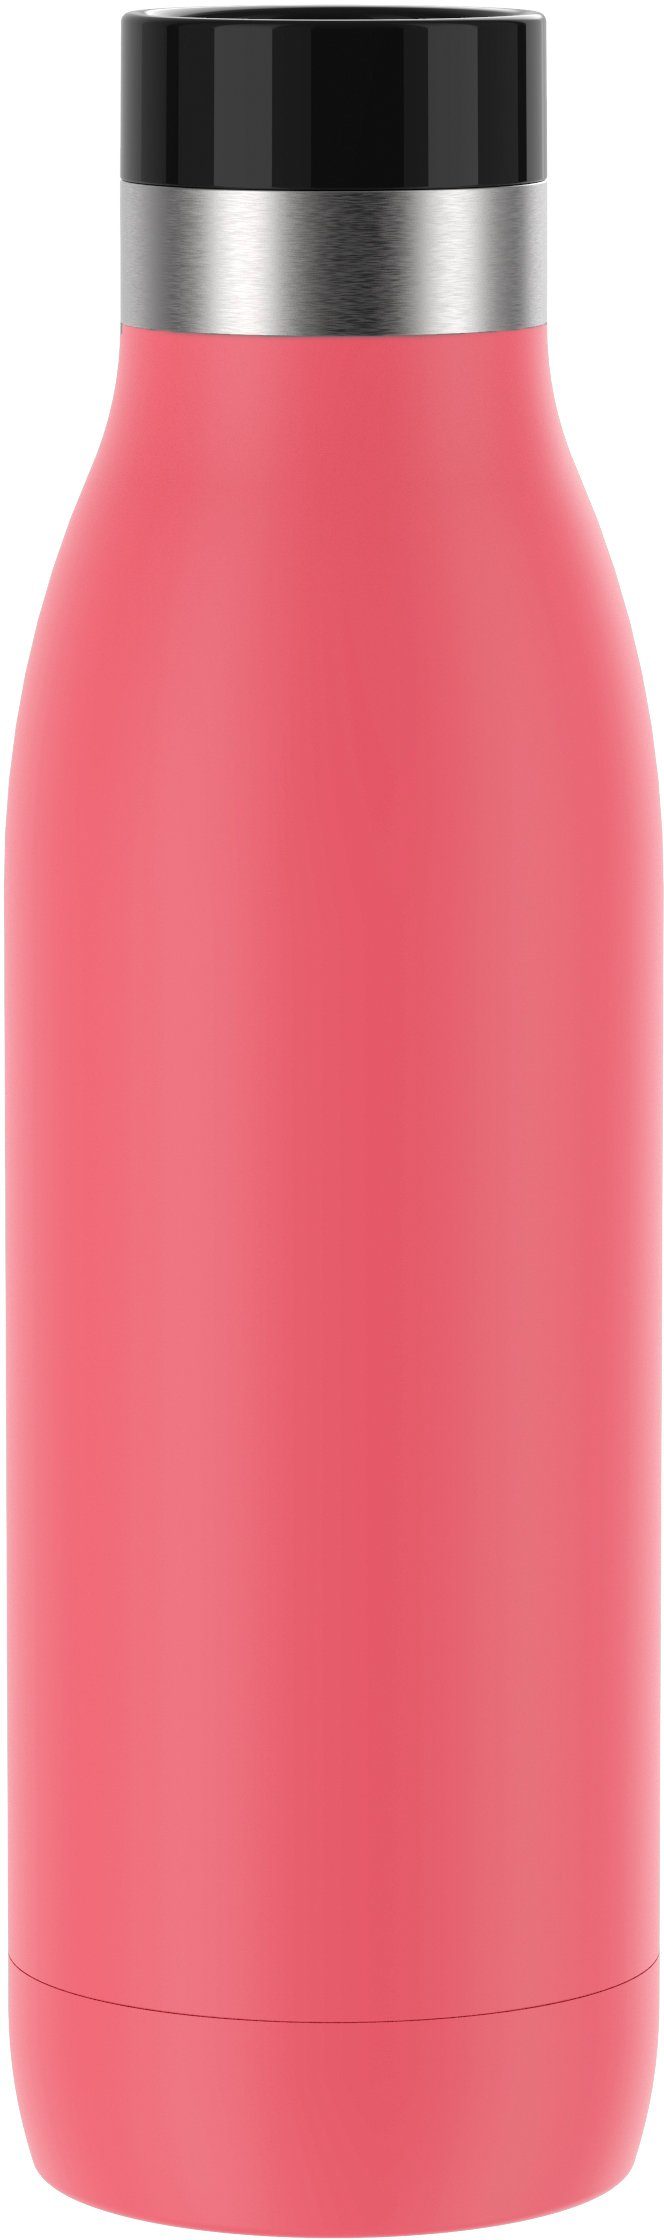 Emsa Trinkflasche Color, Bludrop 12h kühl, Quick-Press Edelstahl, Deckel, spülmaschinenfest warm/24h